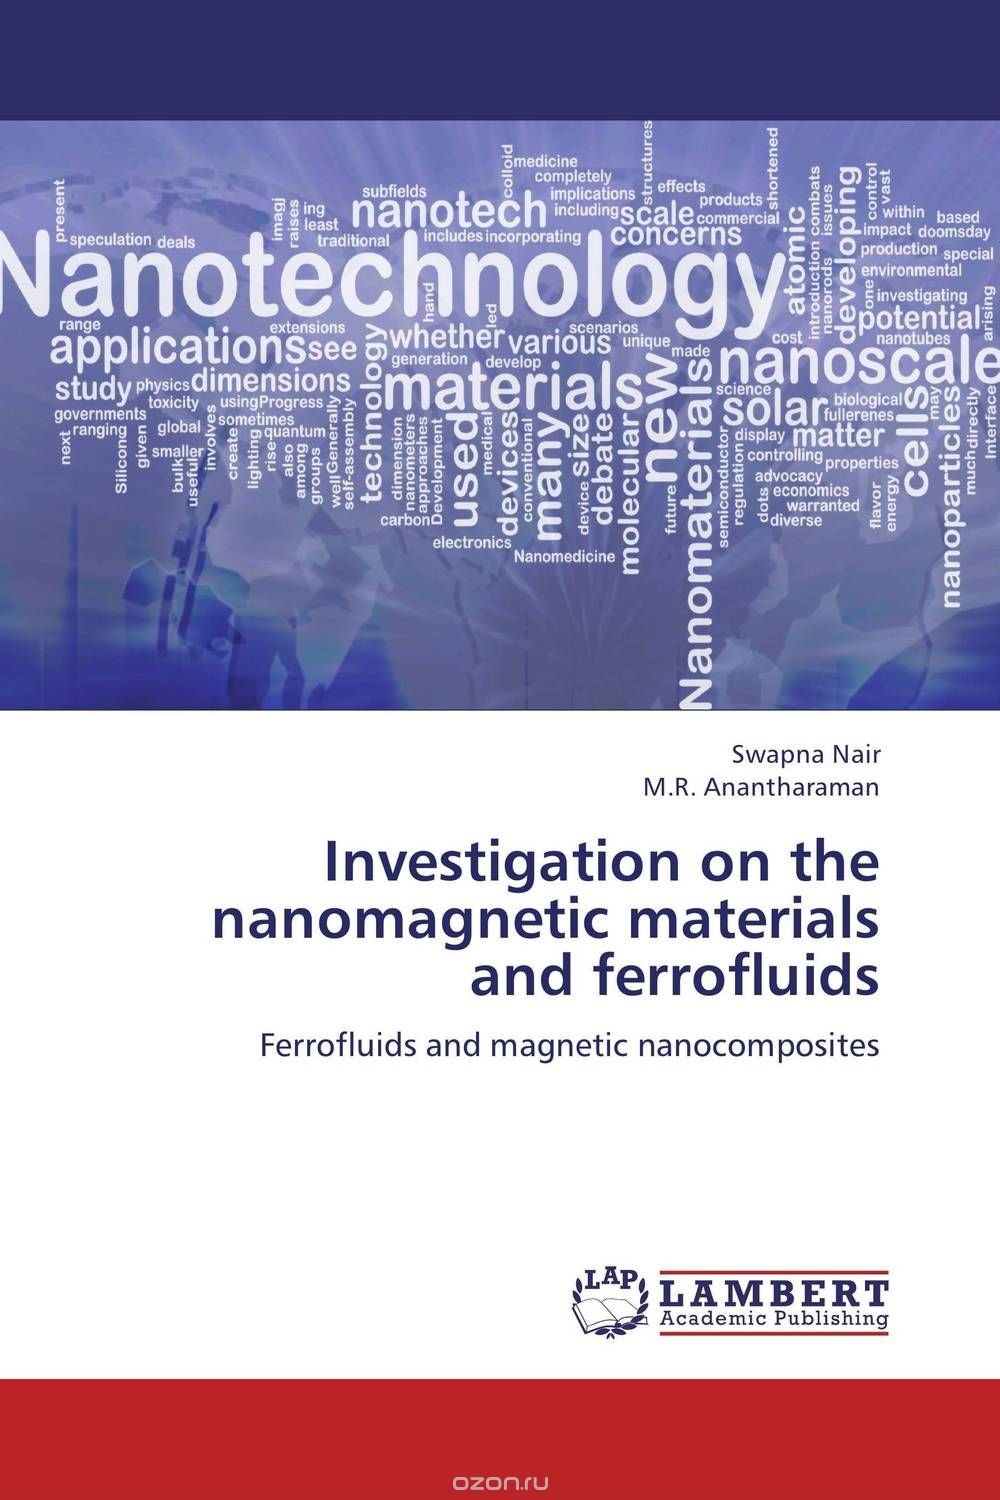 Скачать книгу "Investigation on the nanomagnetic materials and ferrofluids"